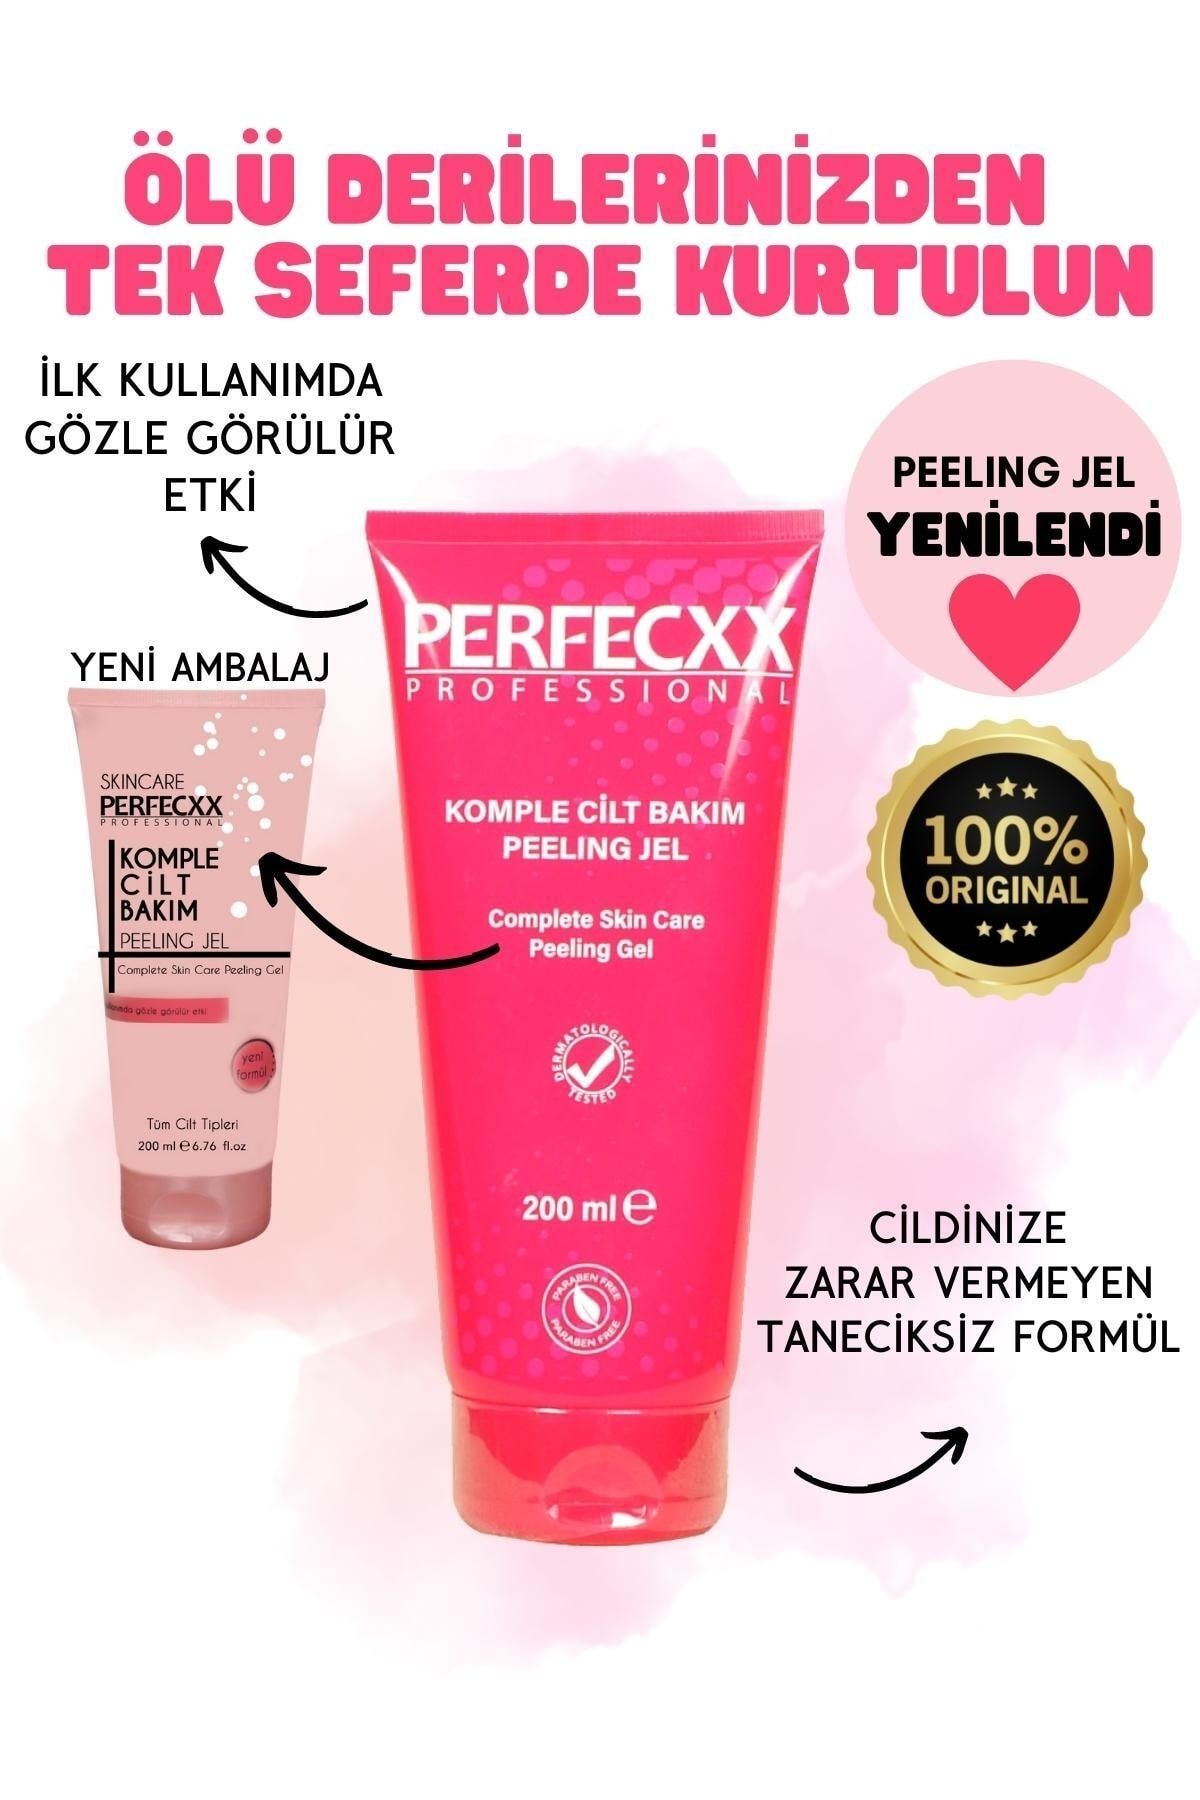 Perfecxx Professional Komple Cilt Bakım Peeling Jel 200 ml